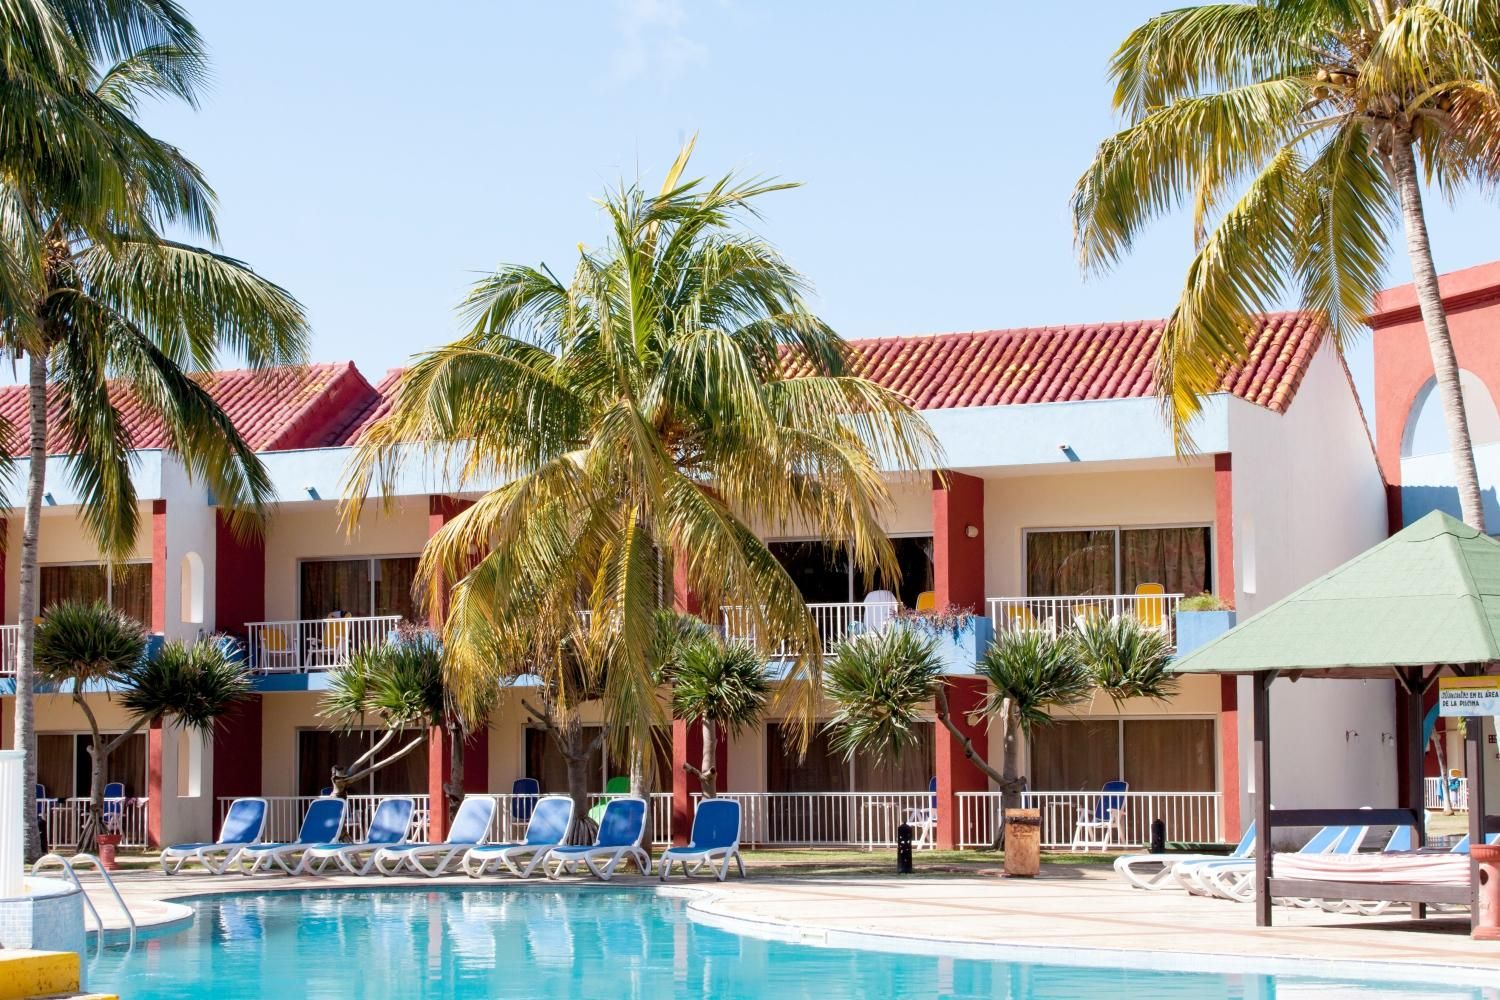 Hôtel Brisas del Caribe 4* pas cher photo 1